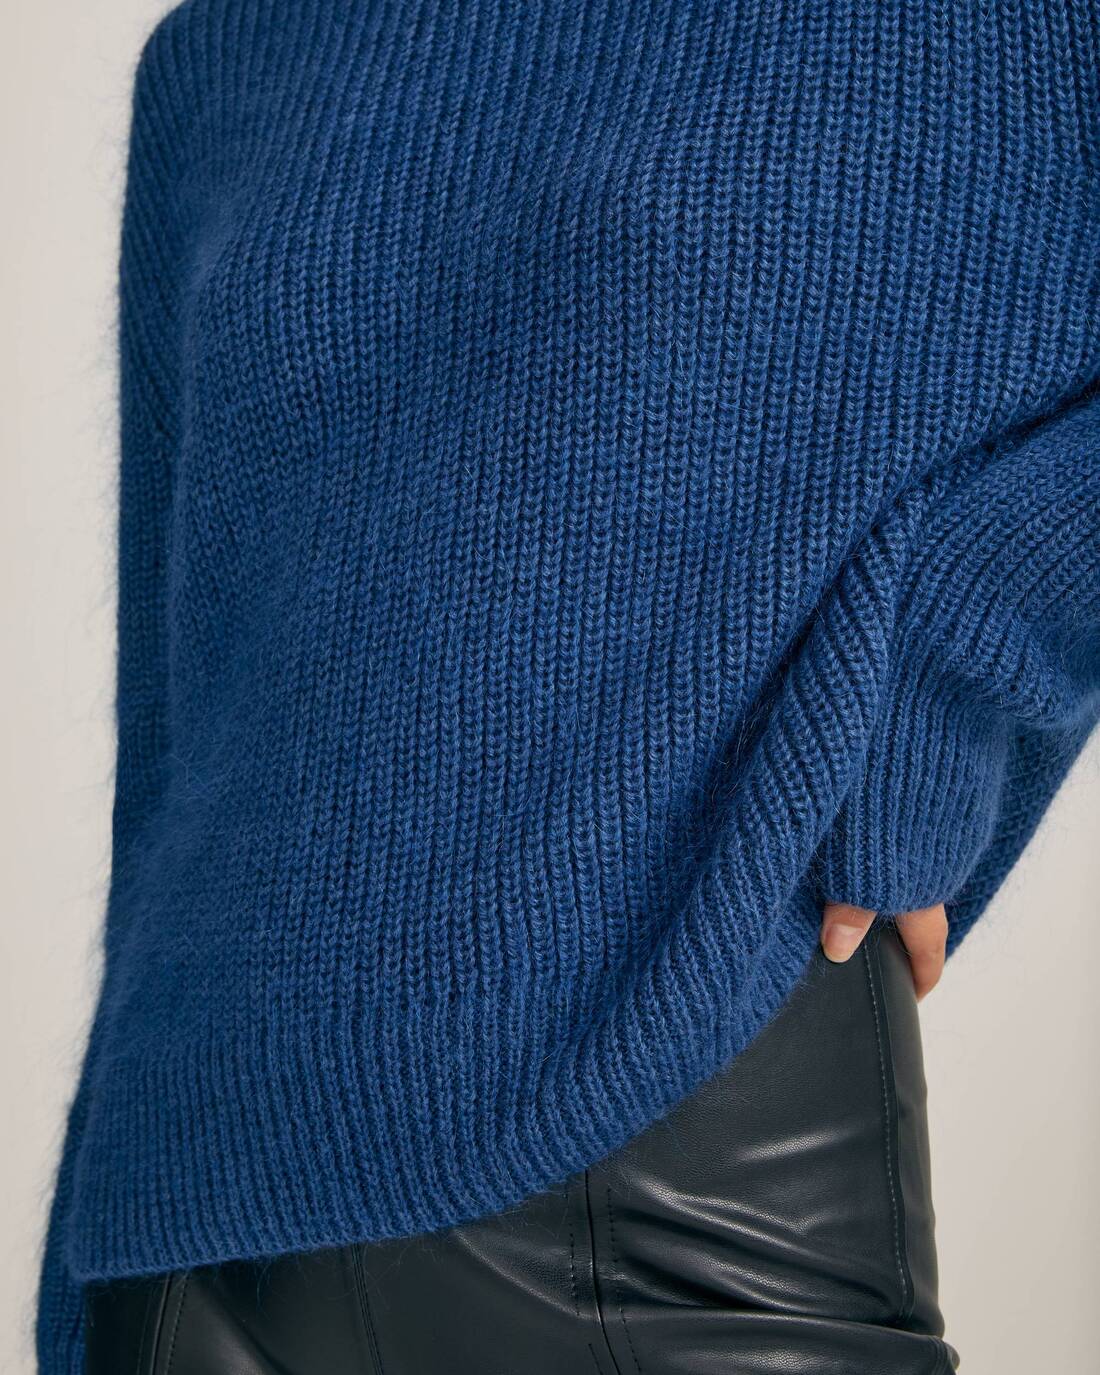 Elongated mohair sweater